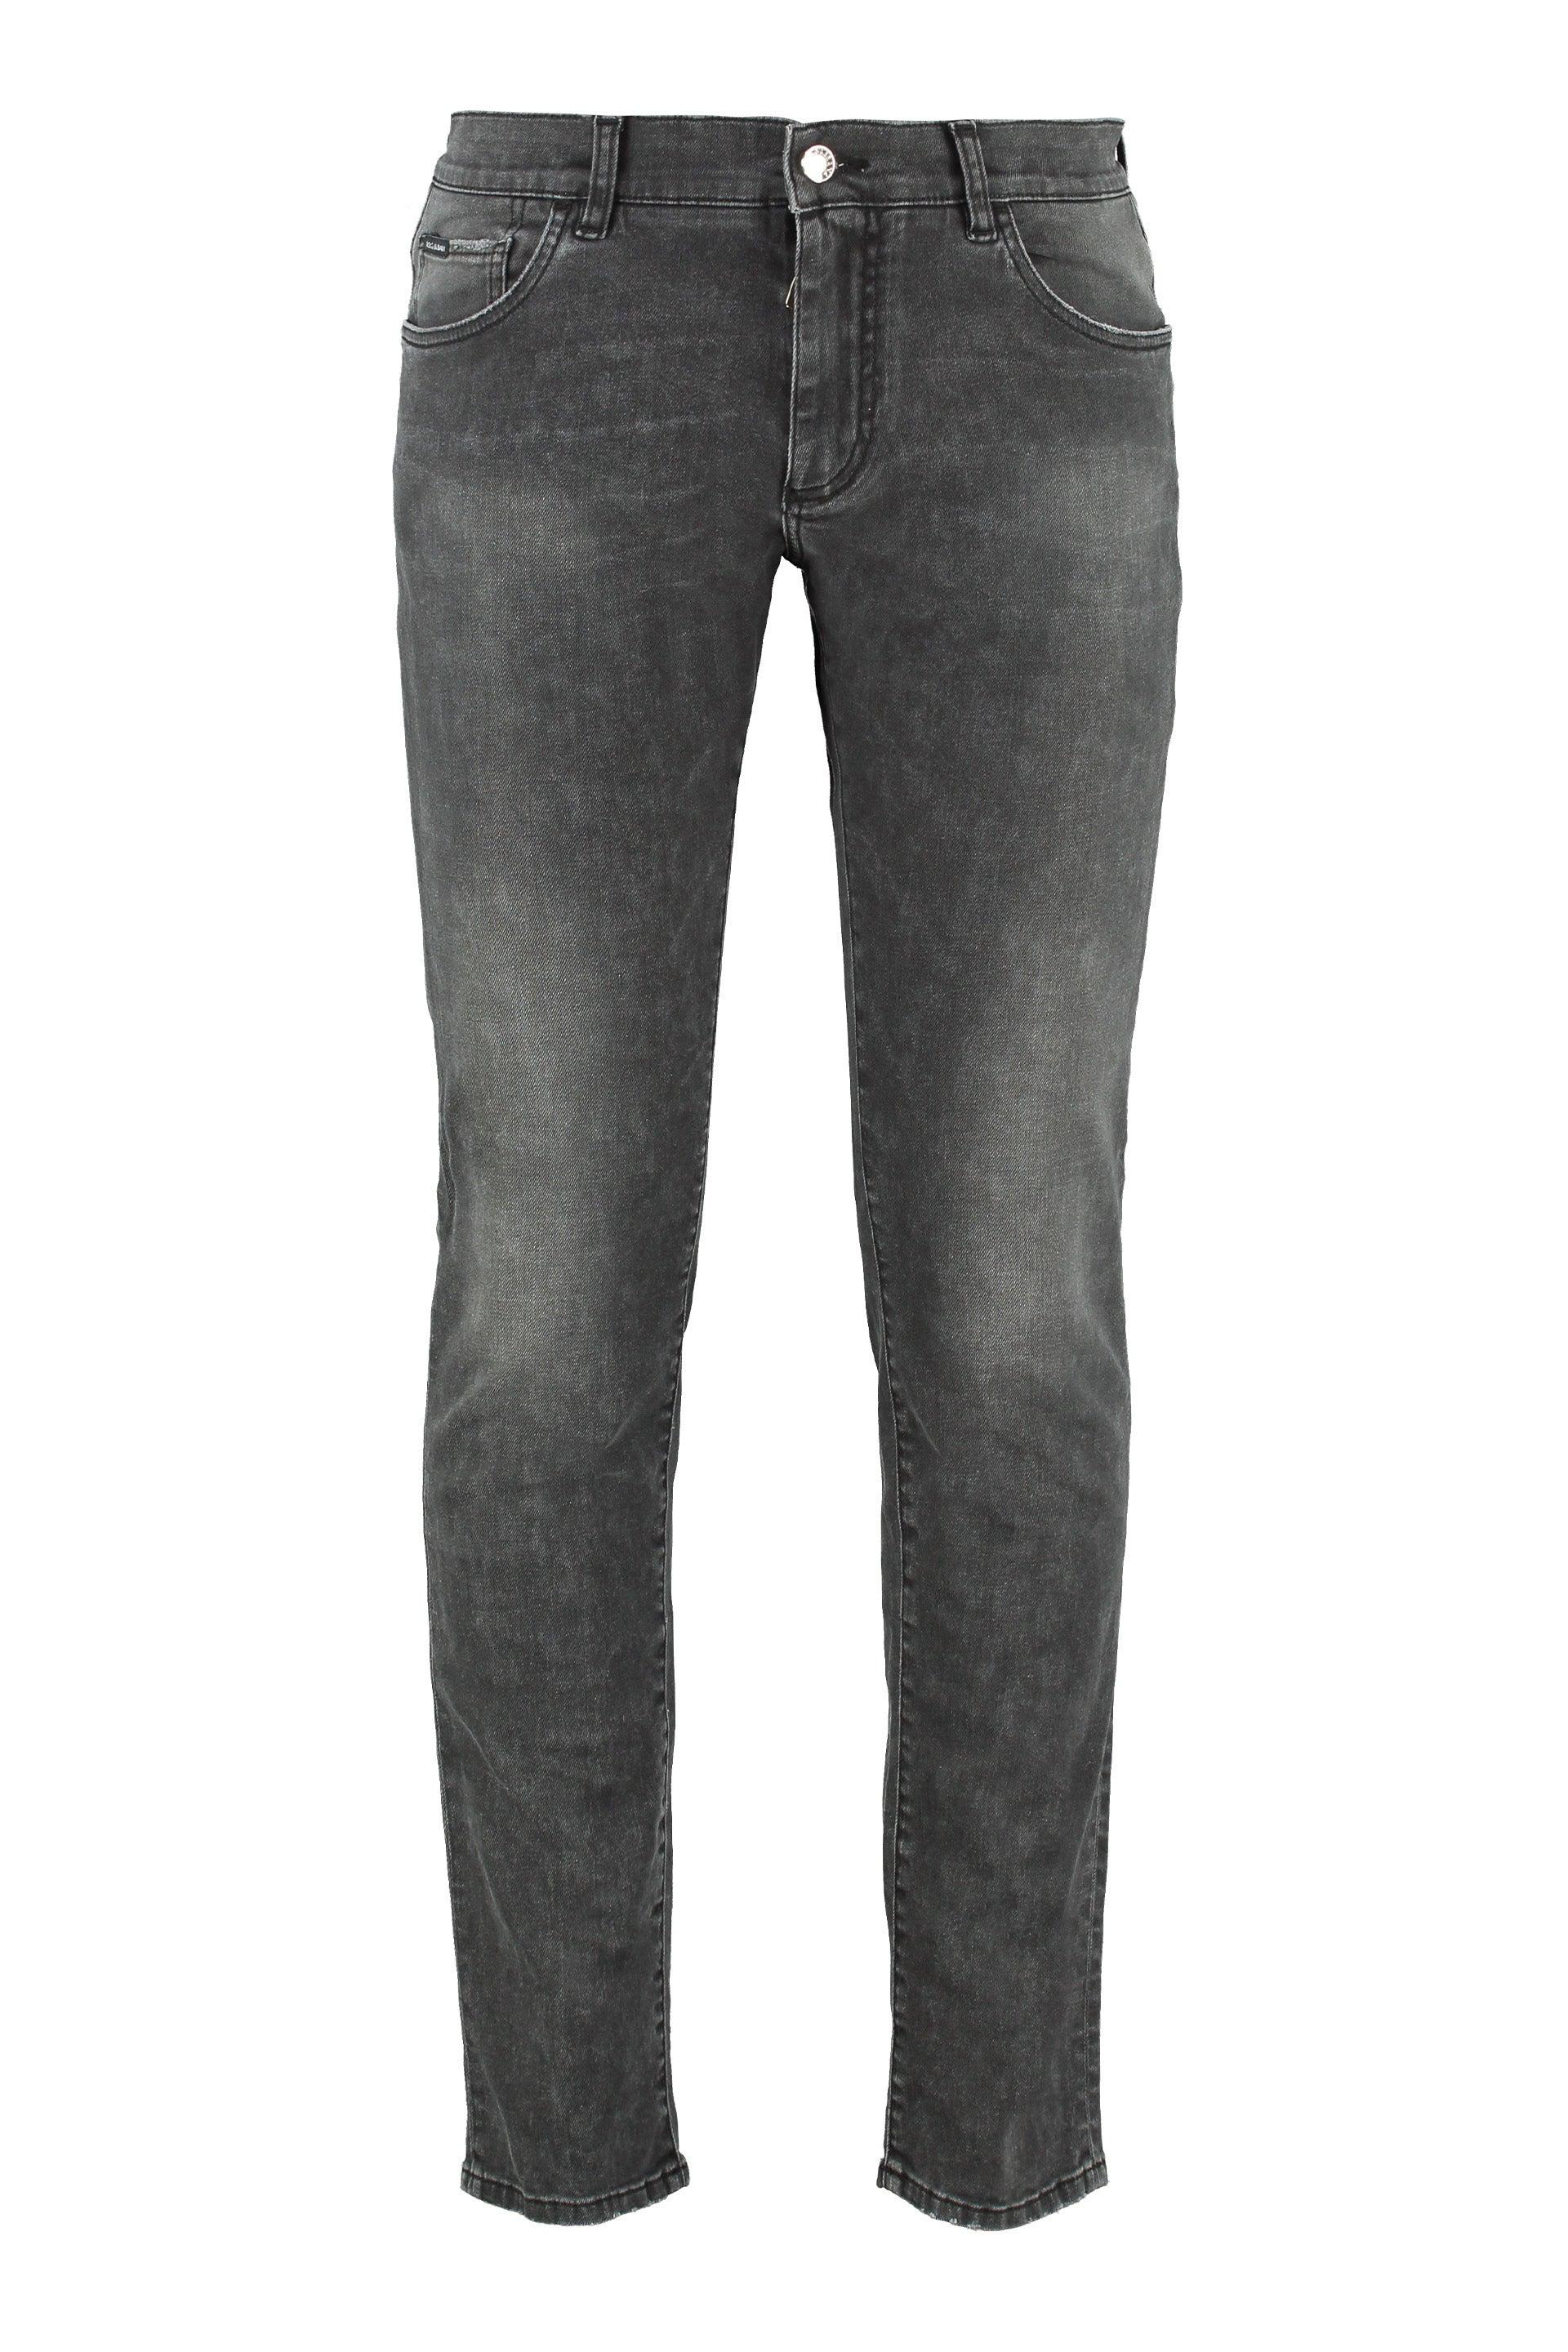 Save 7% Dolce & Gabbana Denim 5-pocket Skinny Jeans in Black for Men Mens Clothing Jeans Skinny jeans 